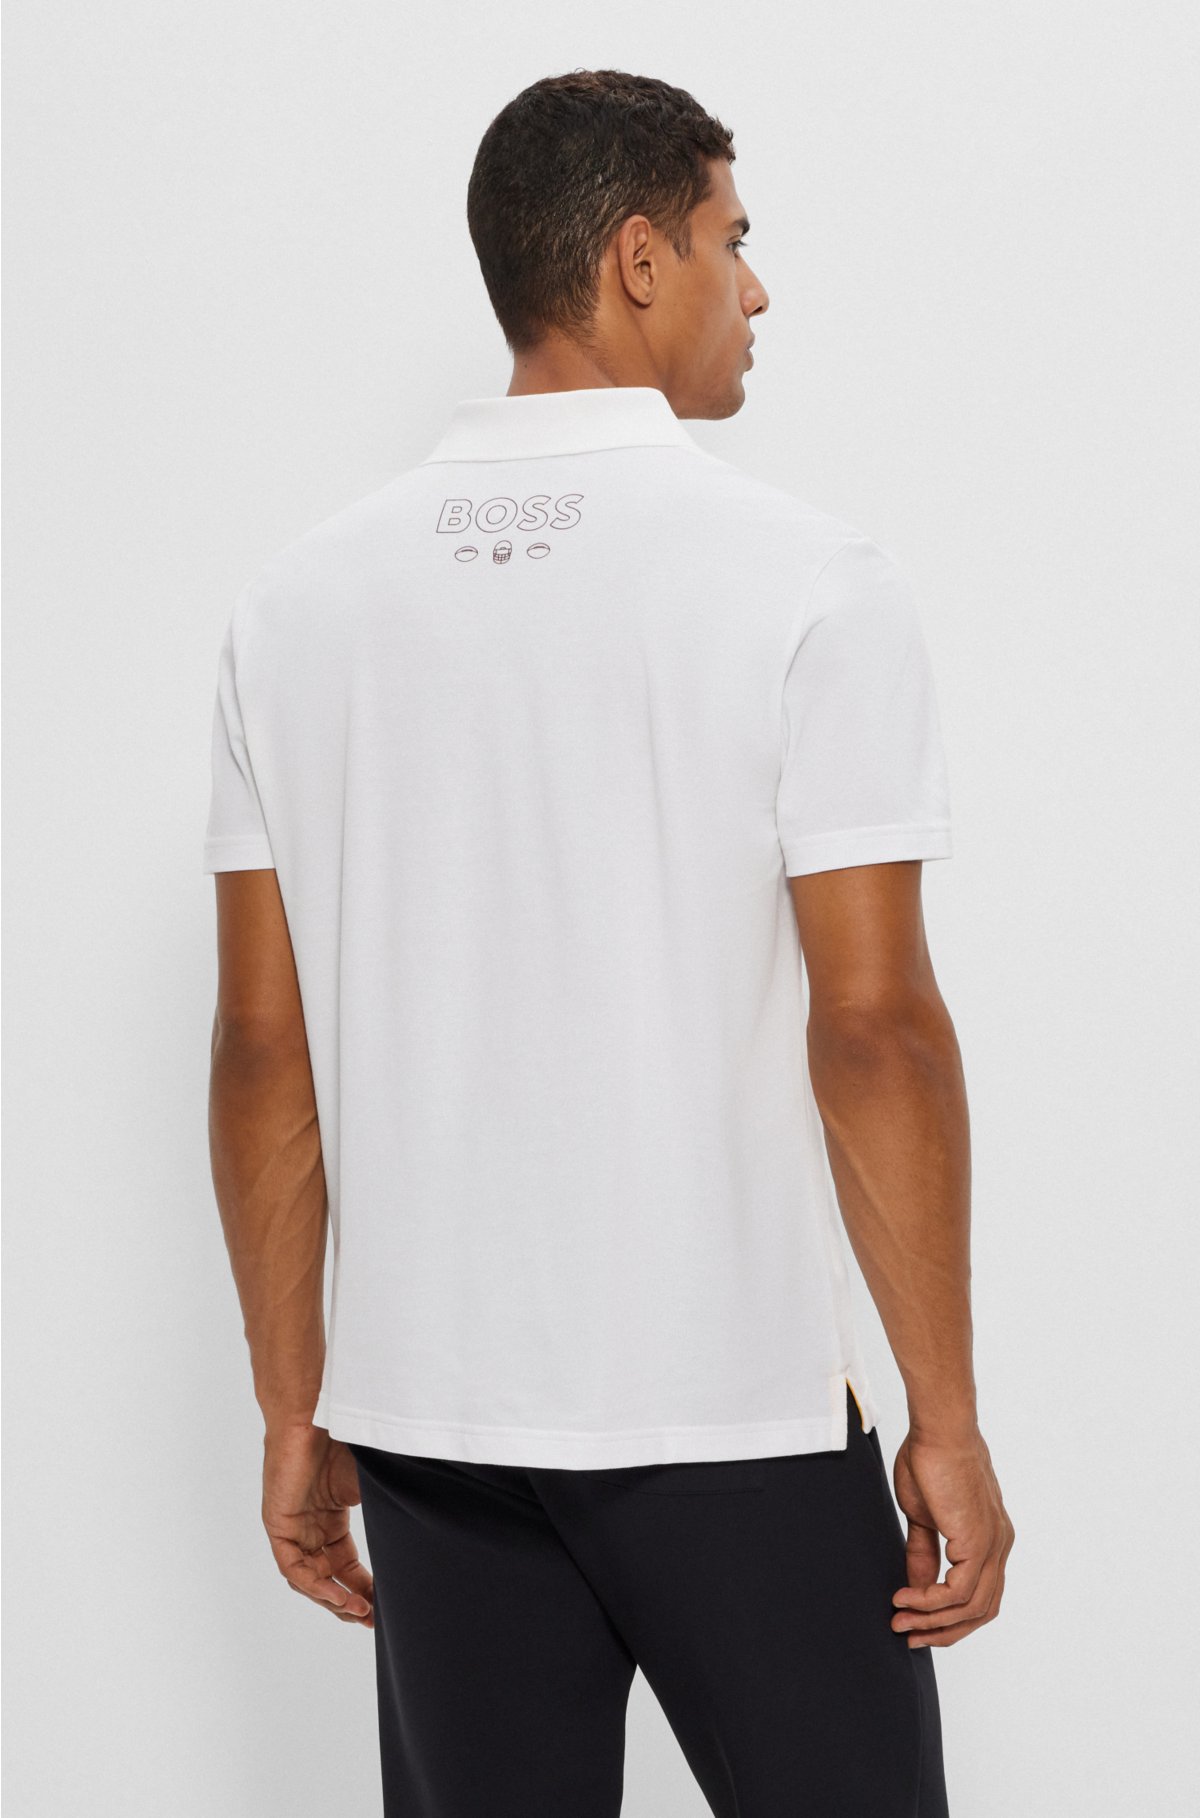 BOSS x NFL cotton-piqué polo shirt with collaborative branding, Commanders